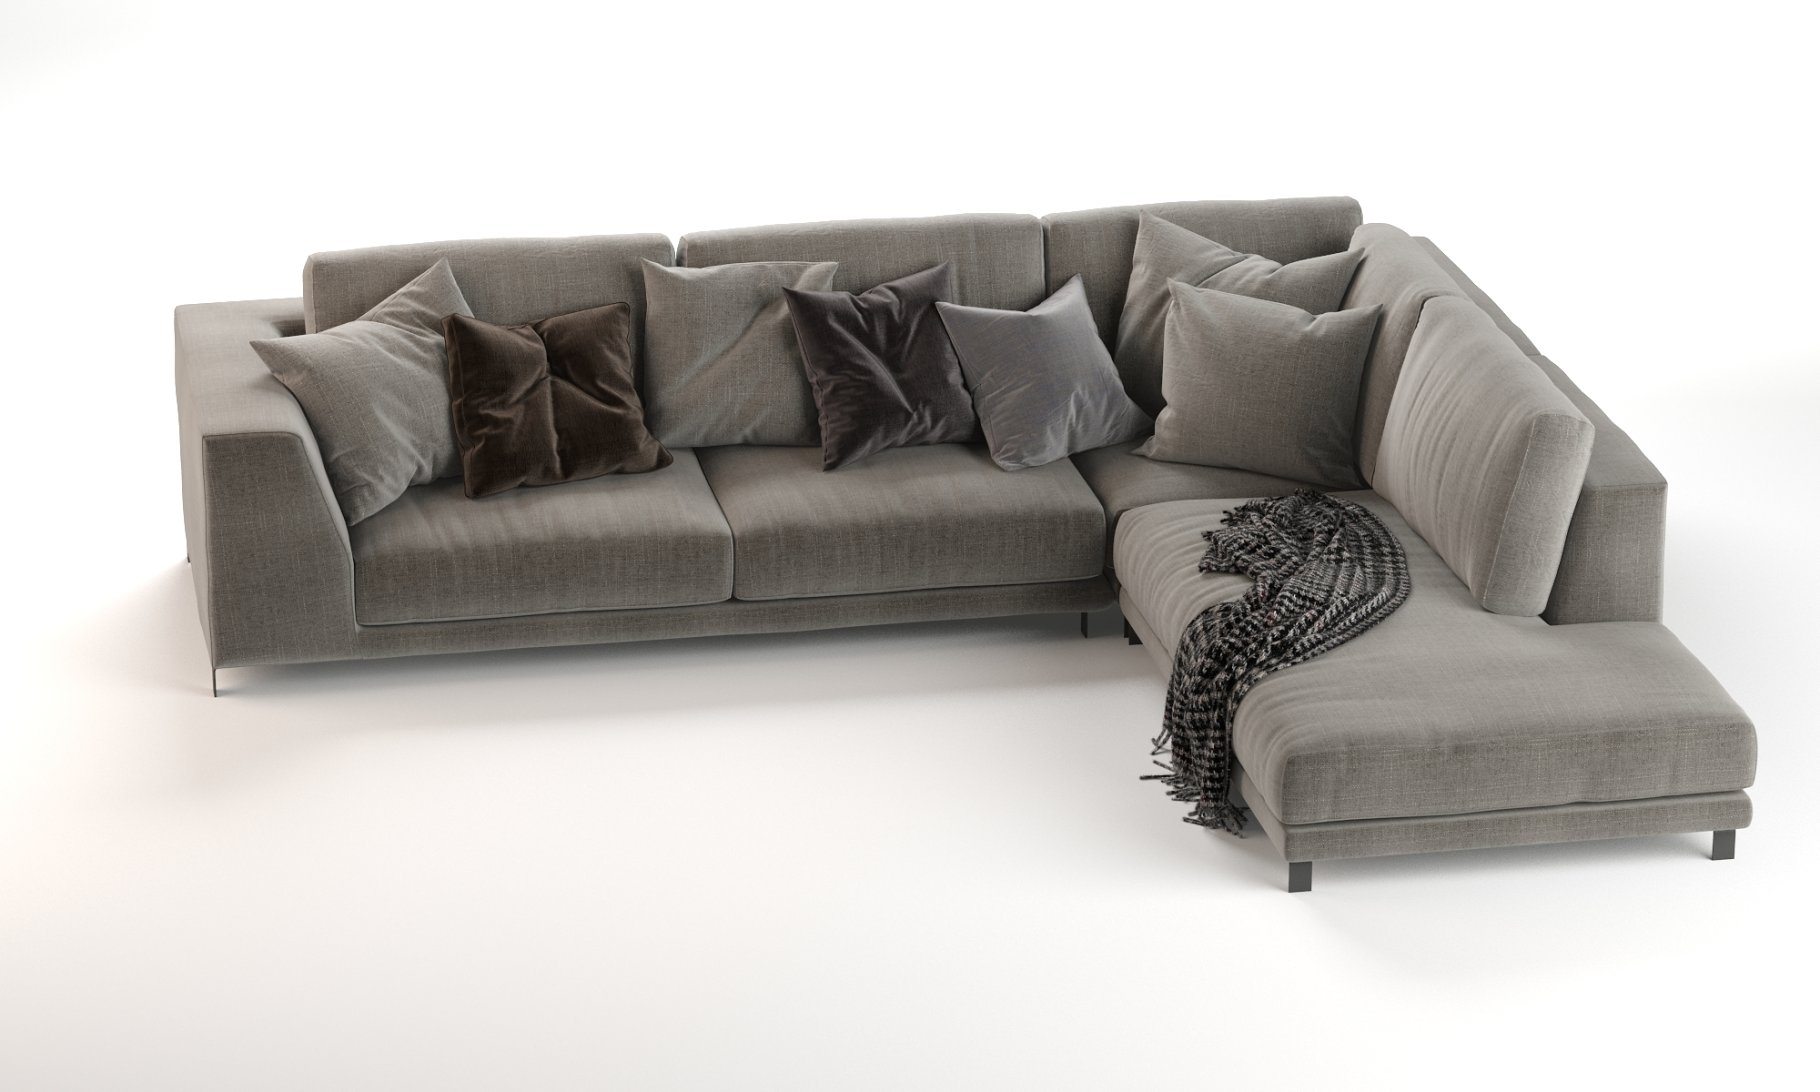 Rendering of a beautiful 3d model of a corner sofa